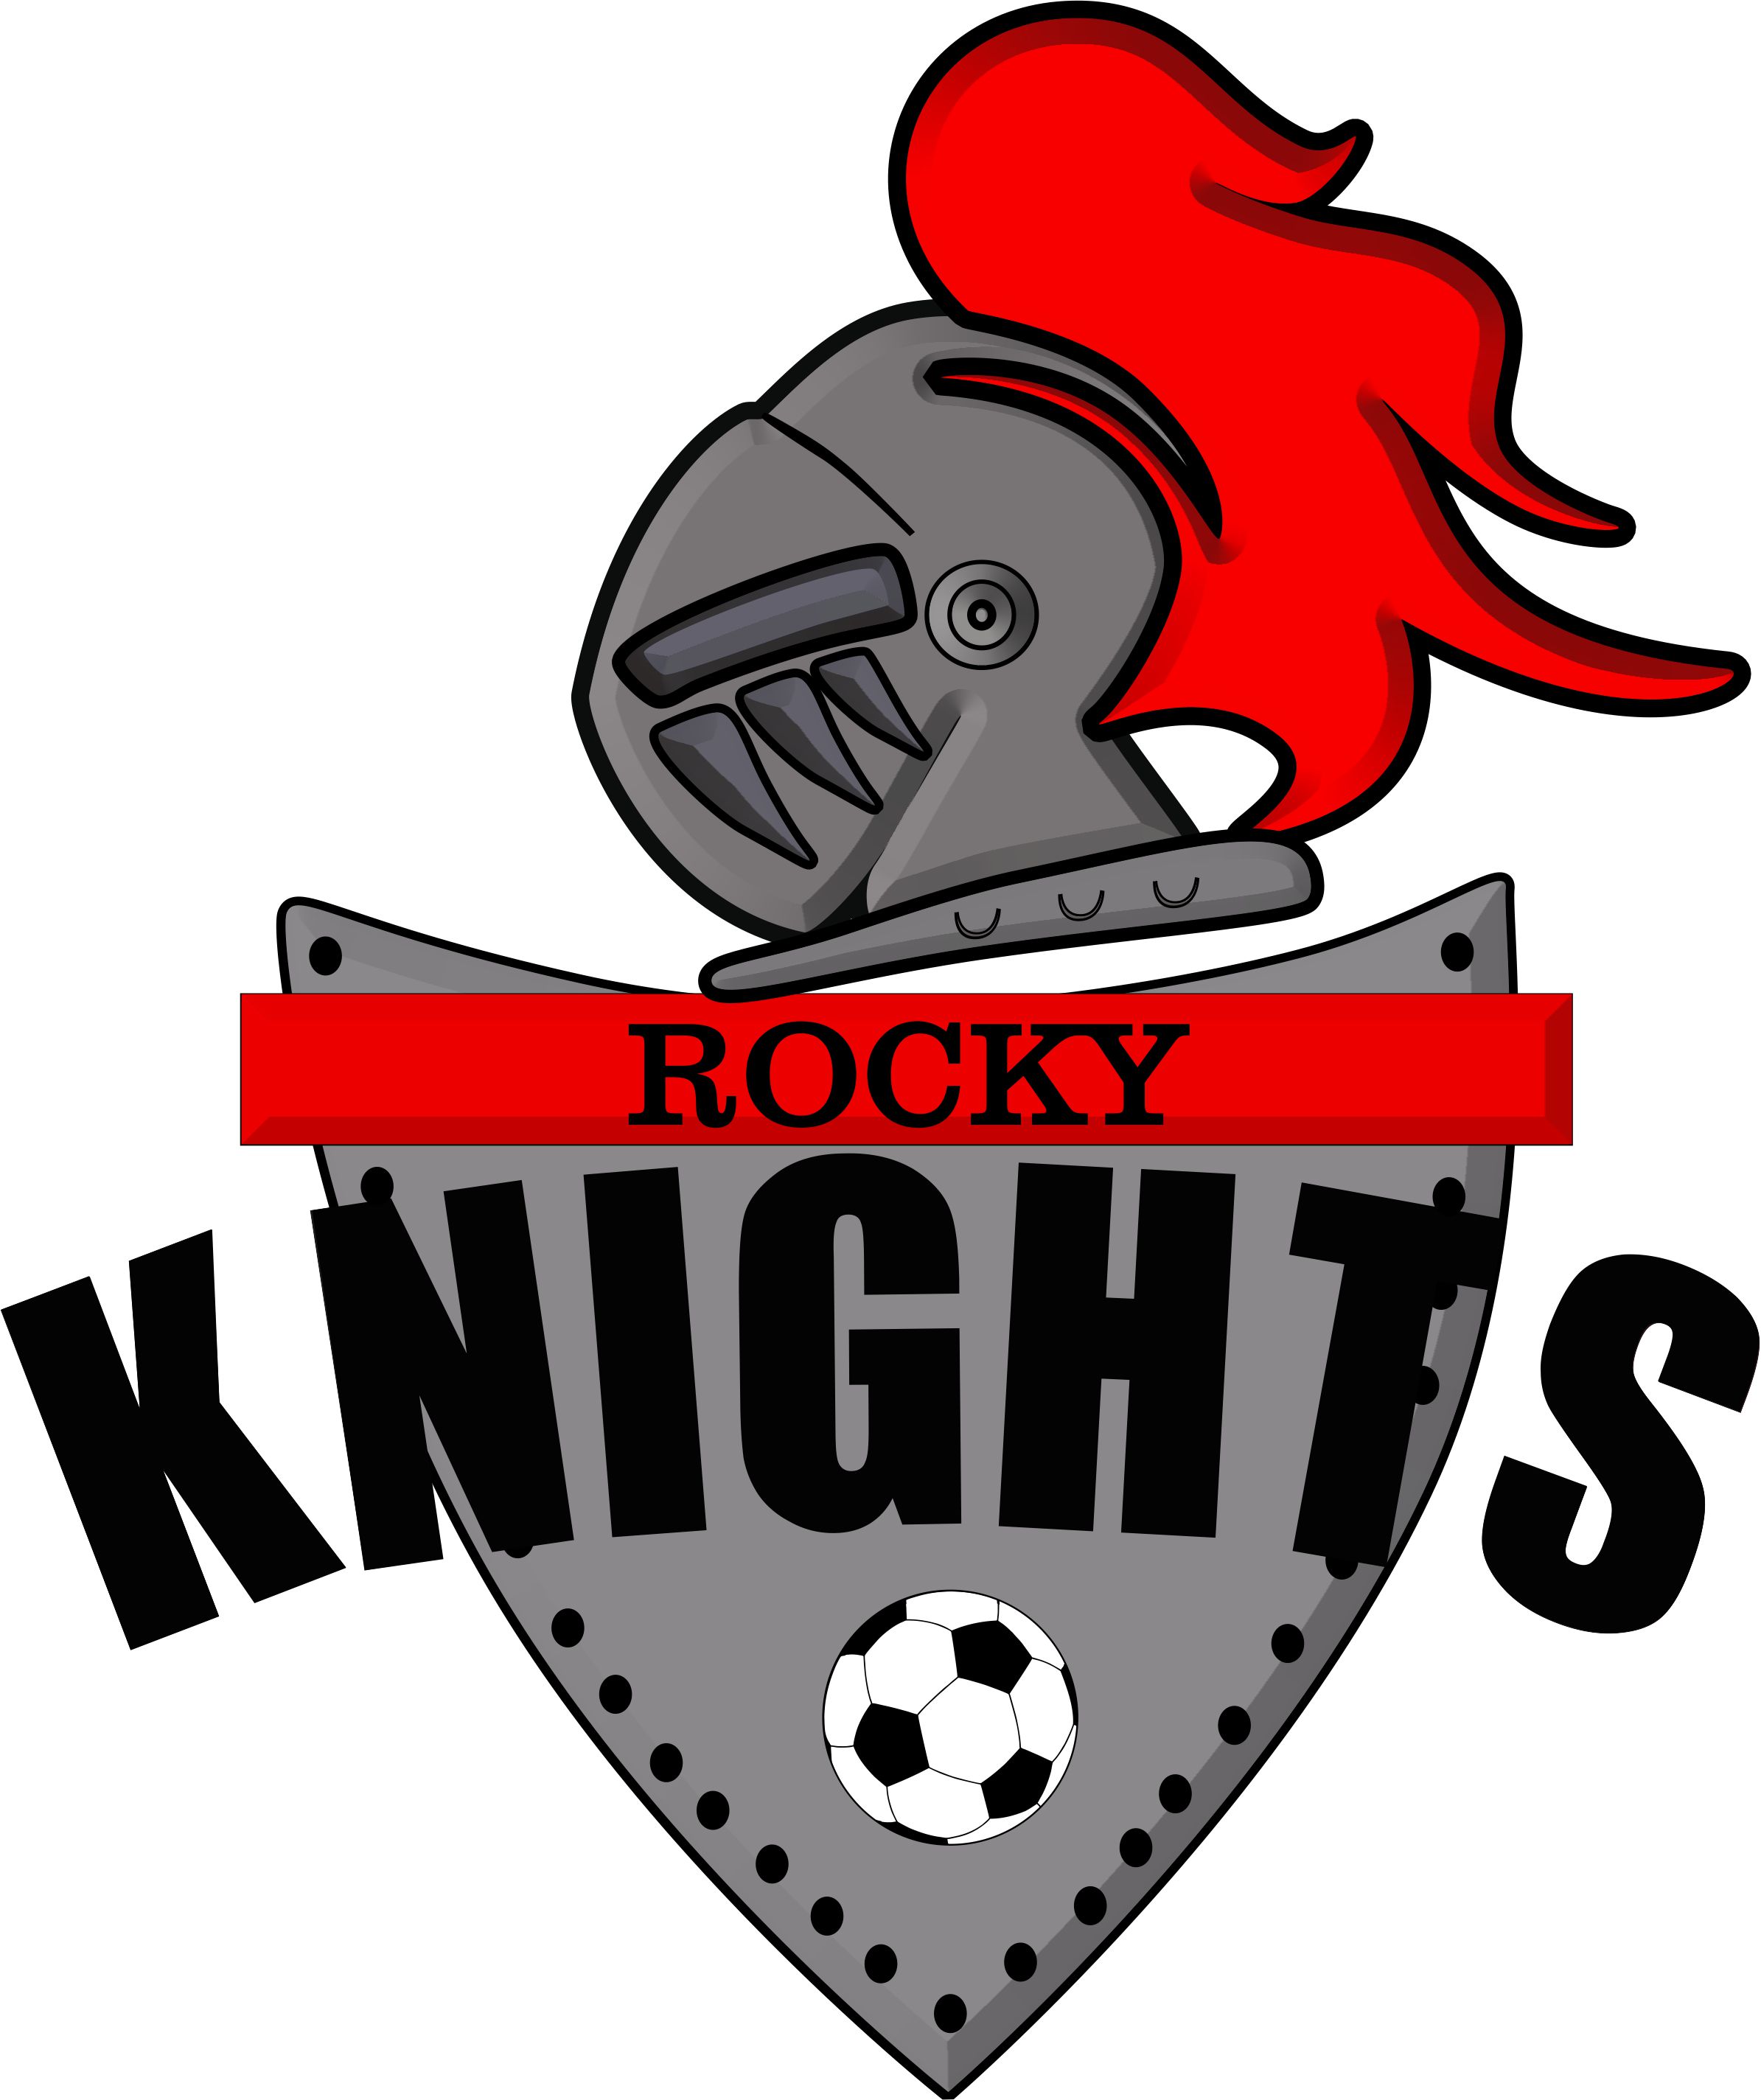 Rocky Knights Soccer